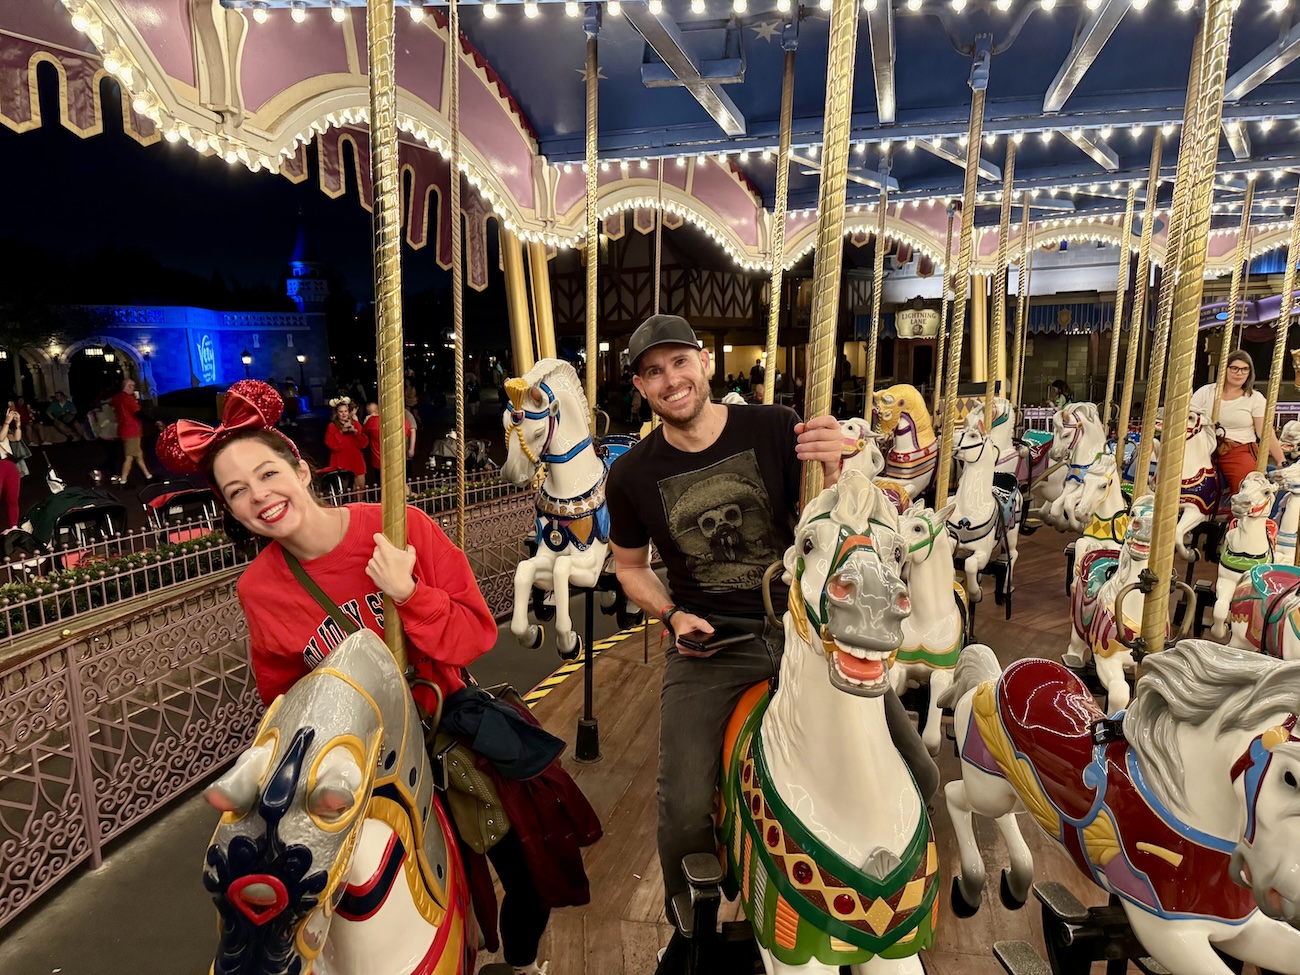 Riding the carousel in the Magic Kingdom